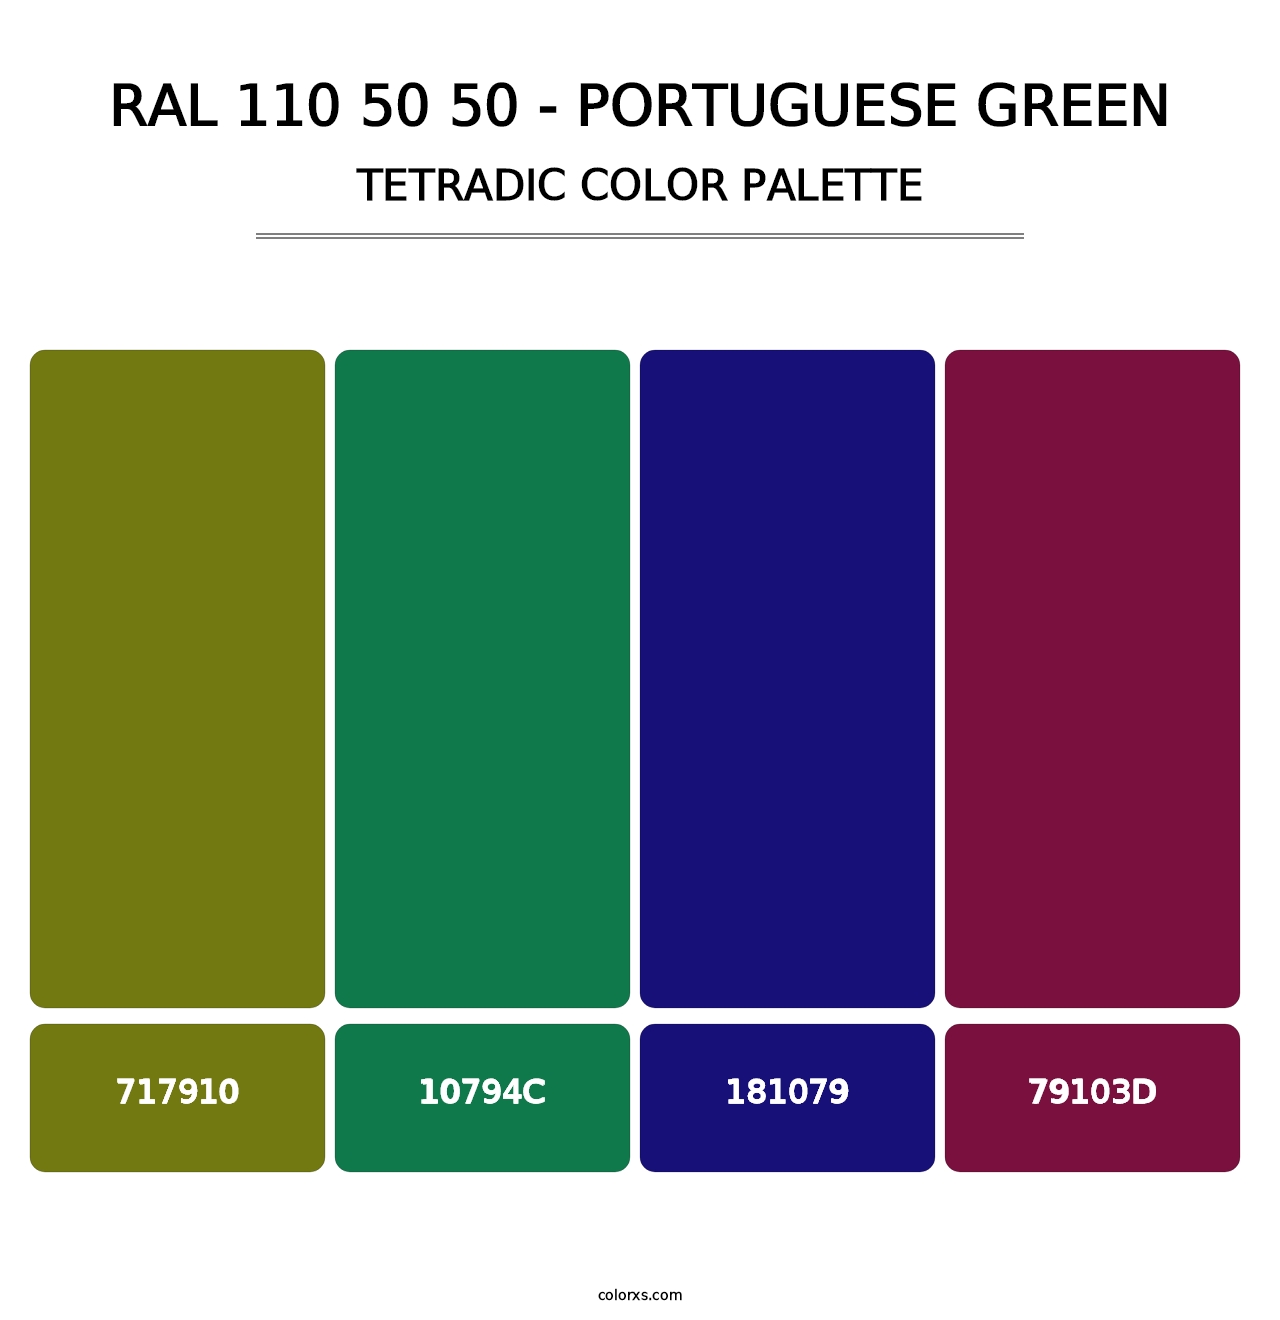 RAL 110 50 50 - Portuguese Green - Tetradic Color Palette